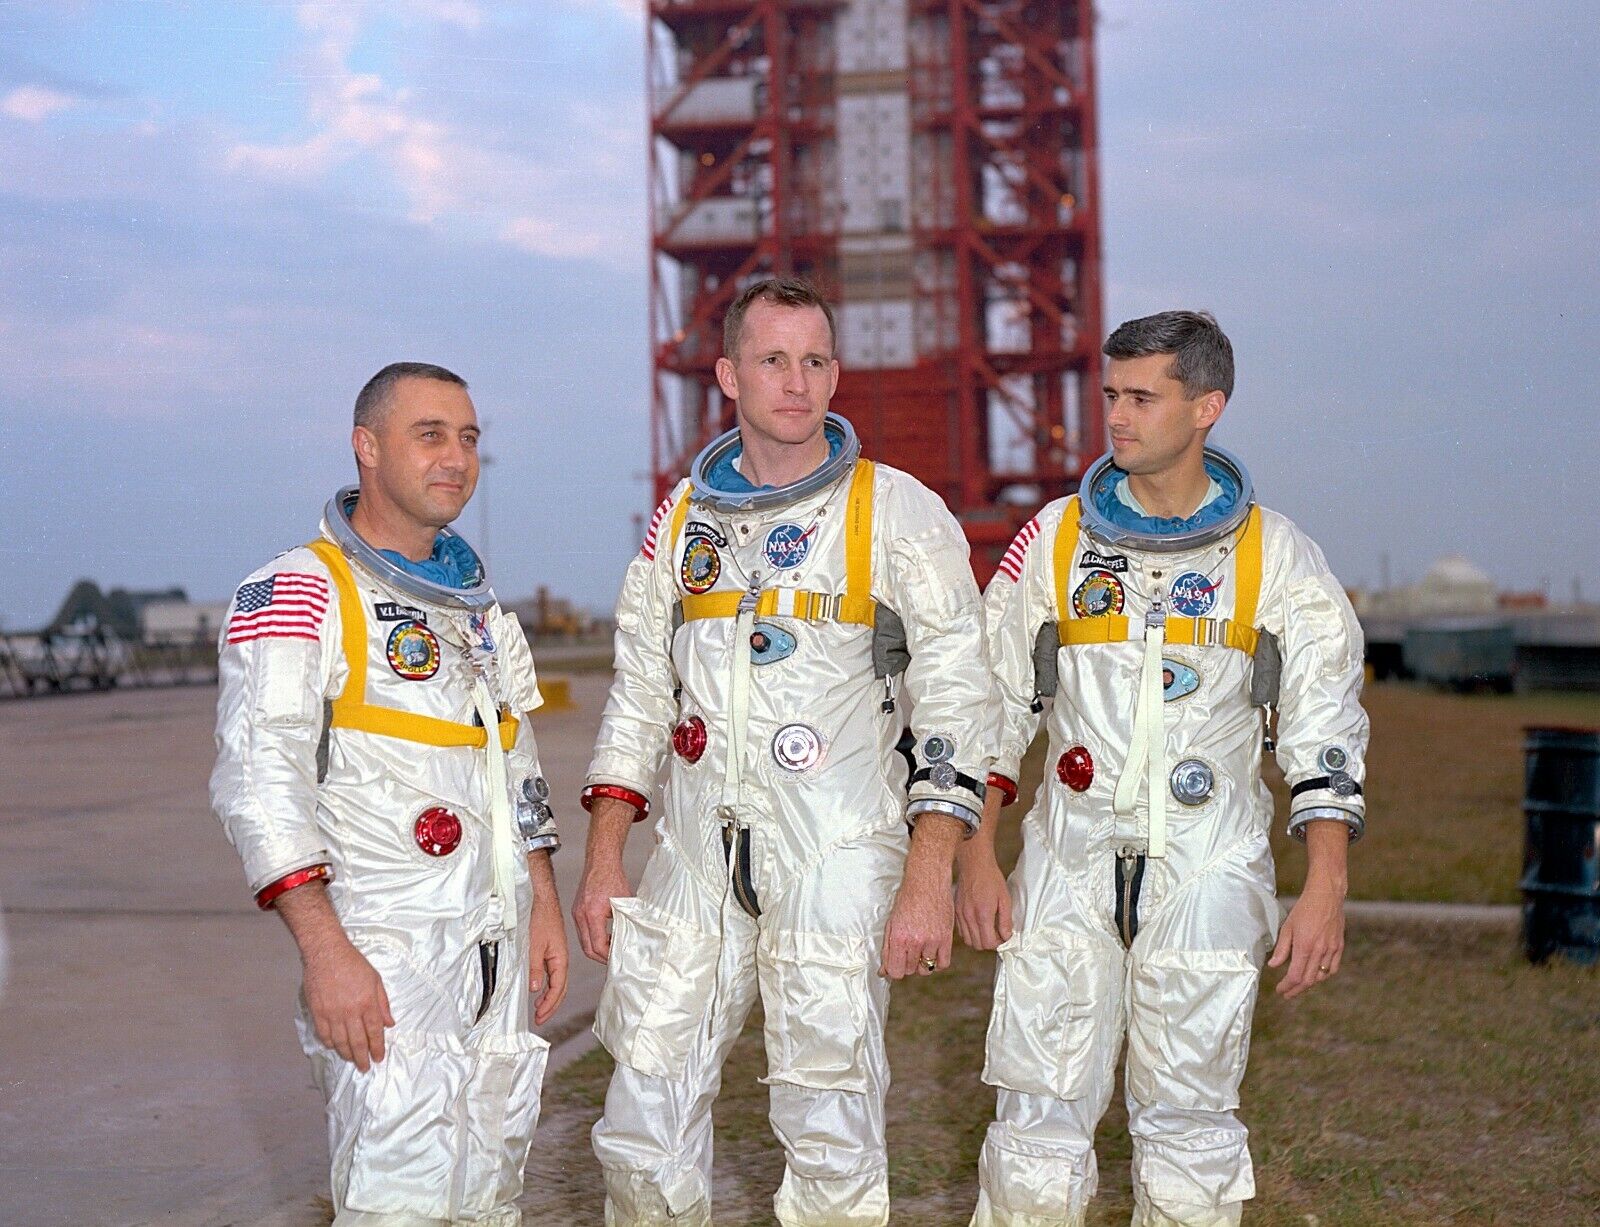 Apollo 1 Crew PHOTO Astronauts Gus Grissom, Ed White, CHAFFEE, Died Jan 27, 1967